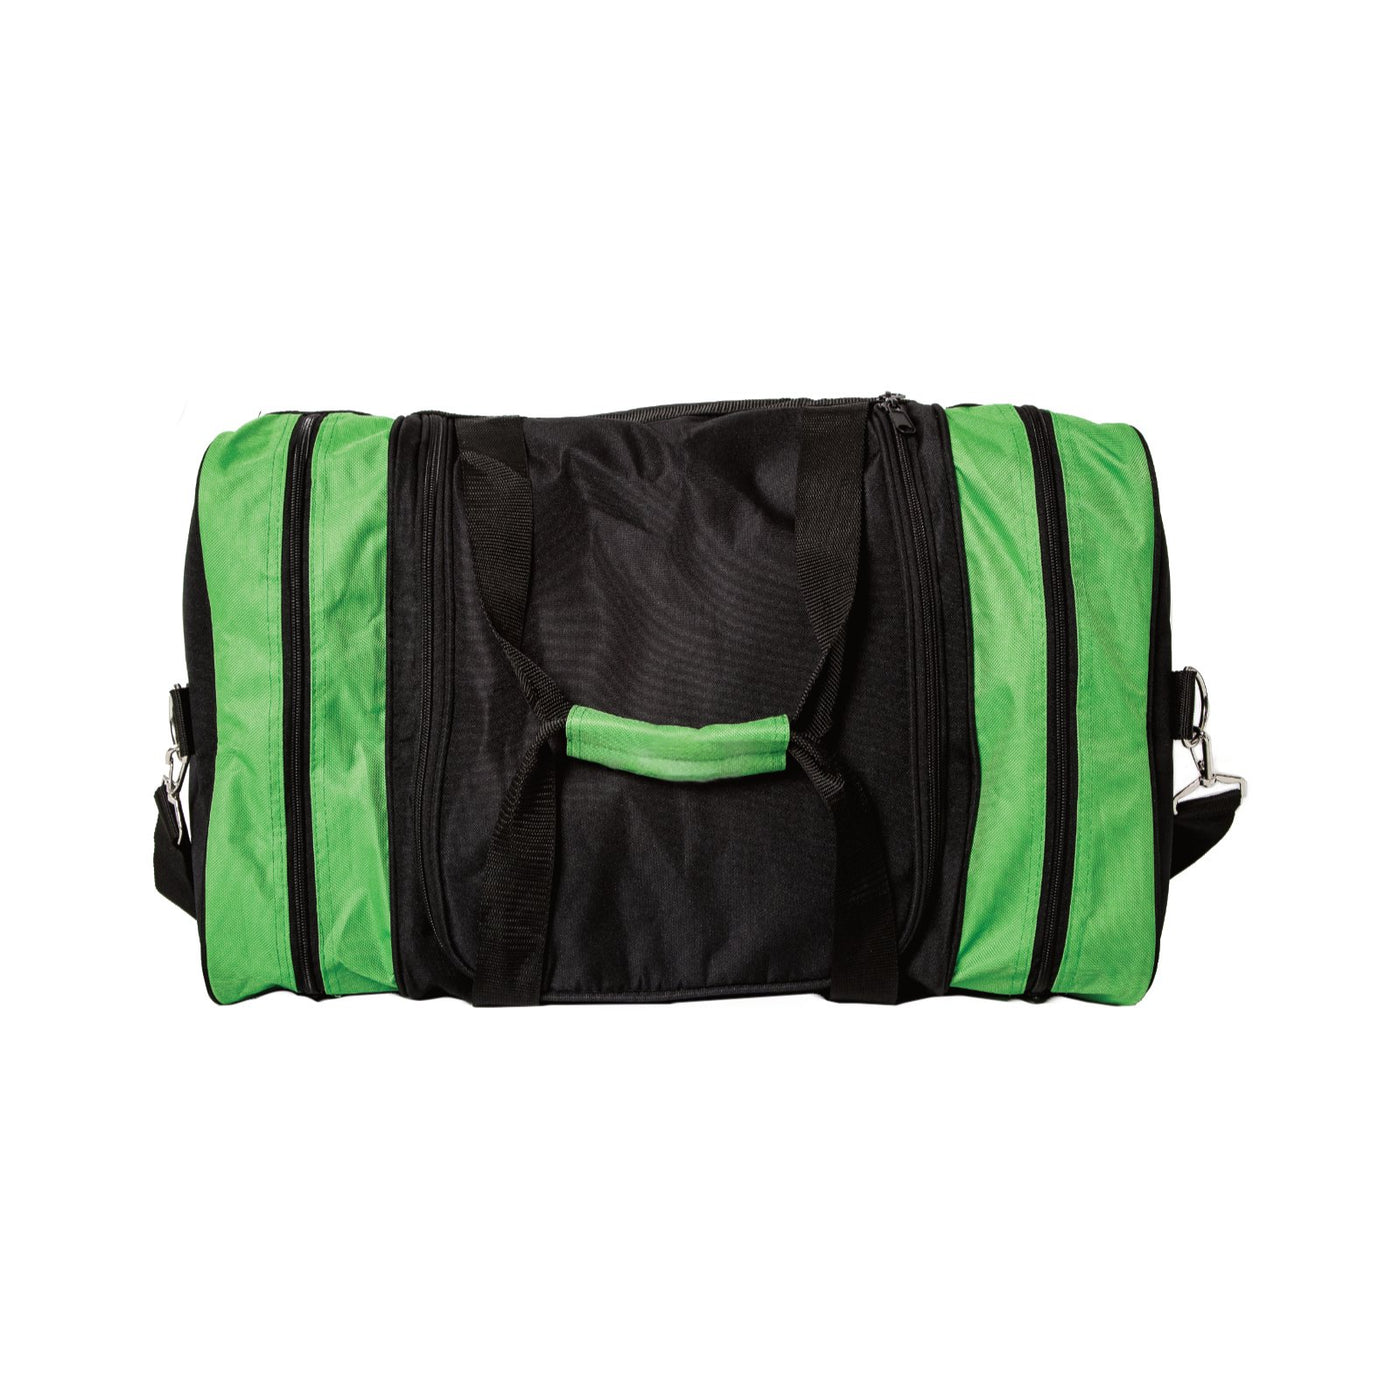 Portable winch Transport bag - 3